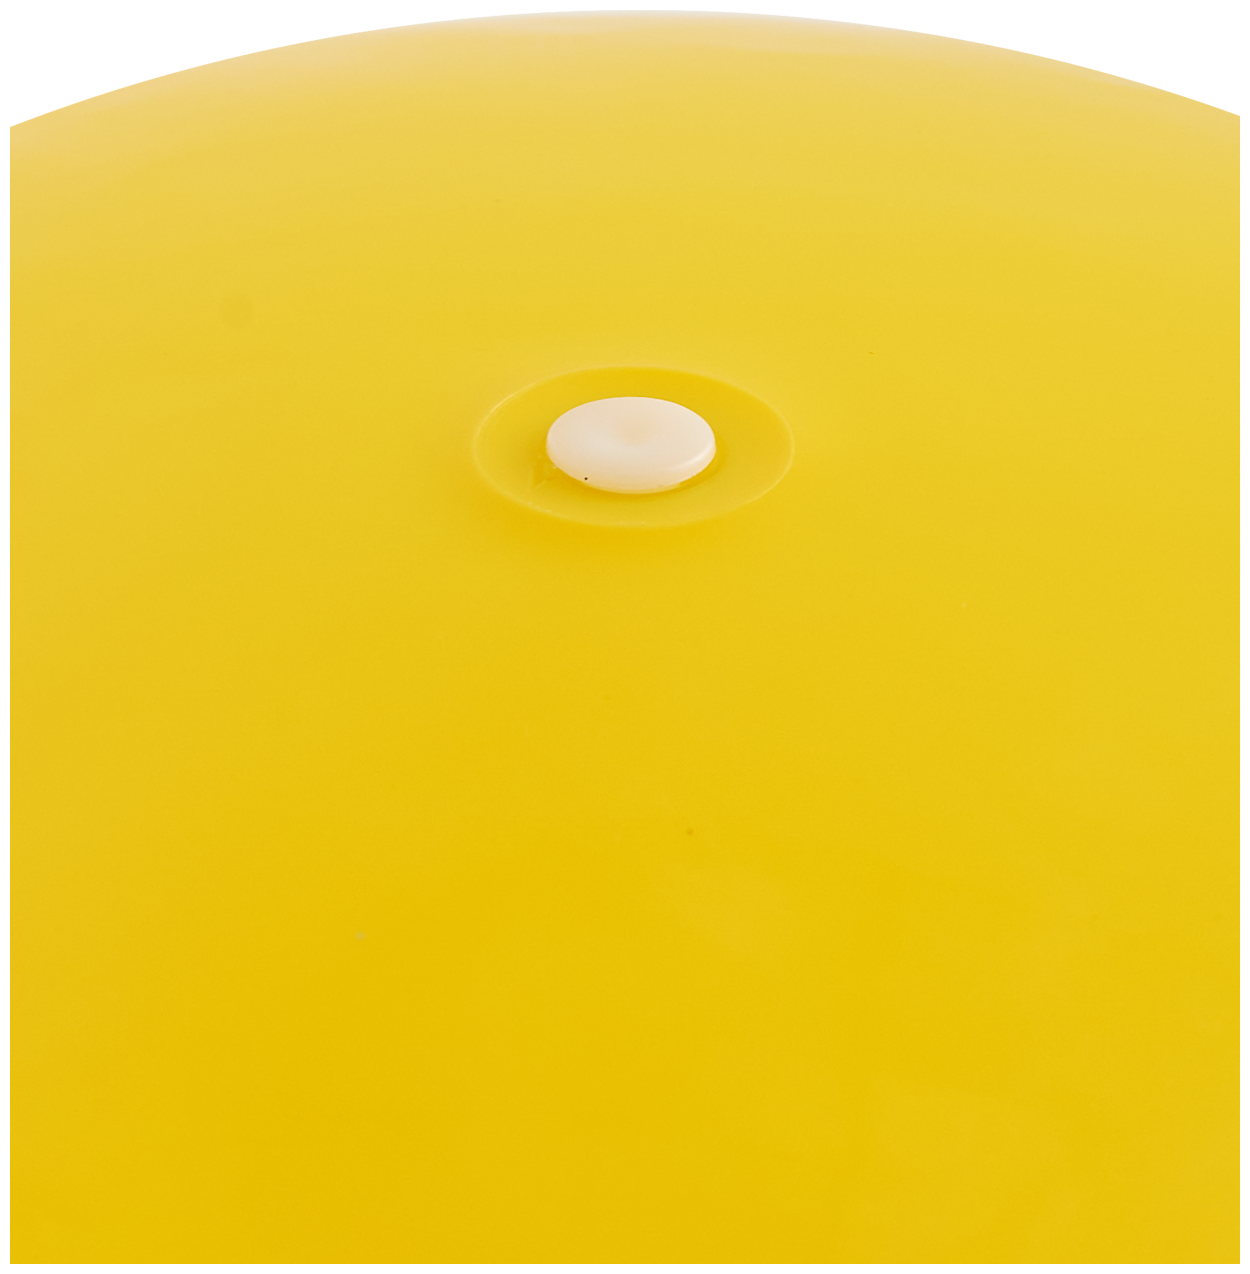 Фитбол детский с ручкой STARFIT GB-411 55 см, 650 гр, антивзрыв, желтый